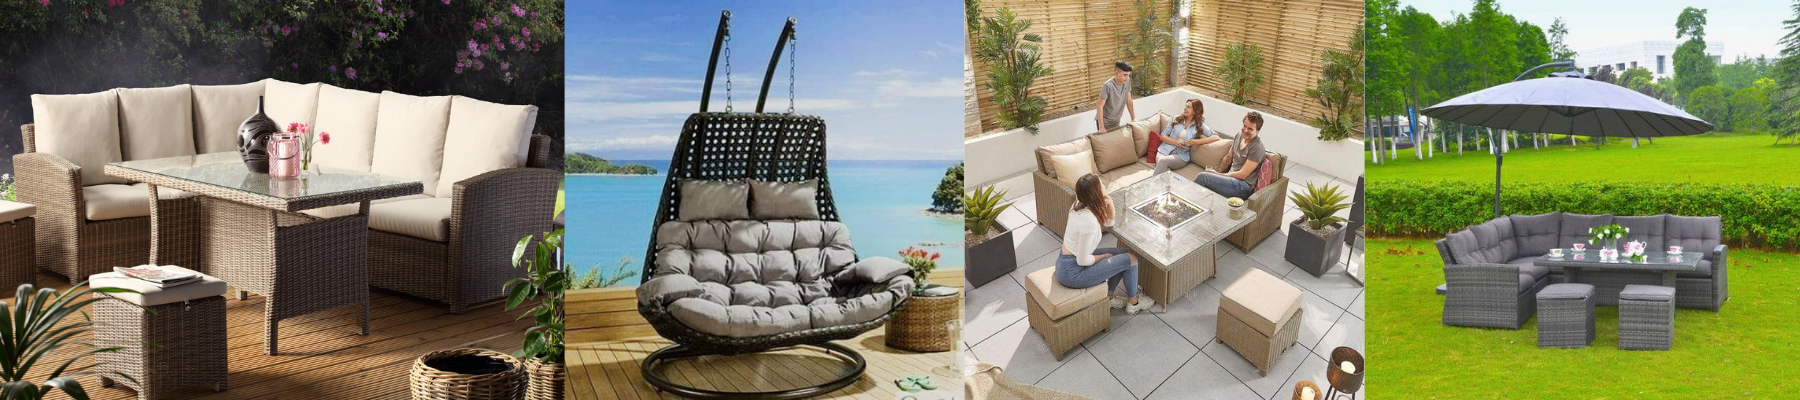 outdoor furniture rattan set - Outdoor Furniture